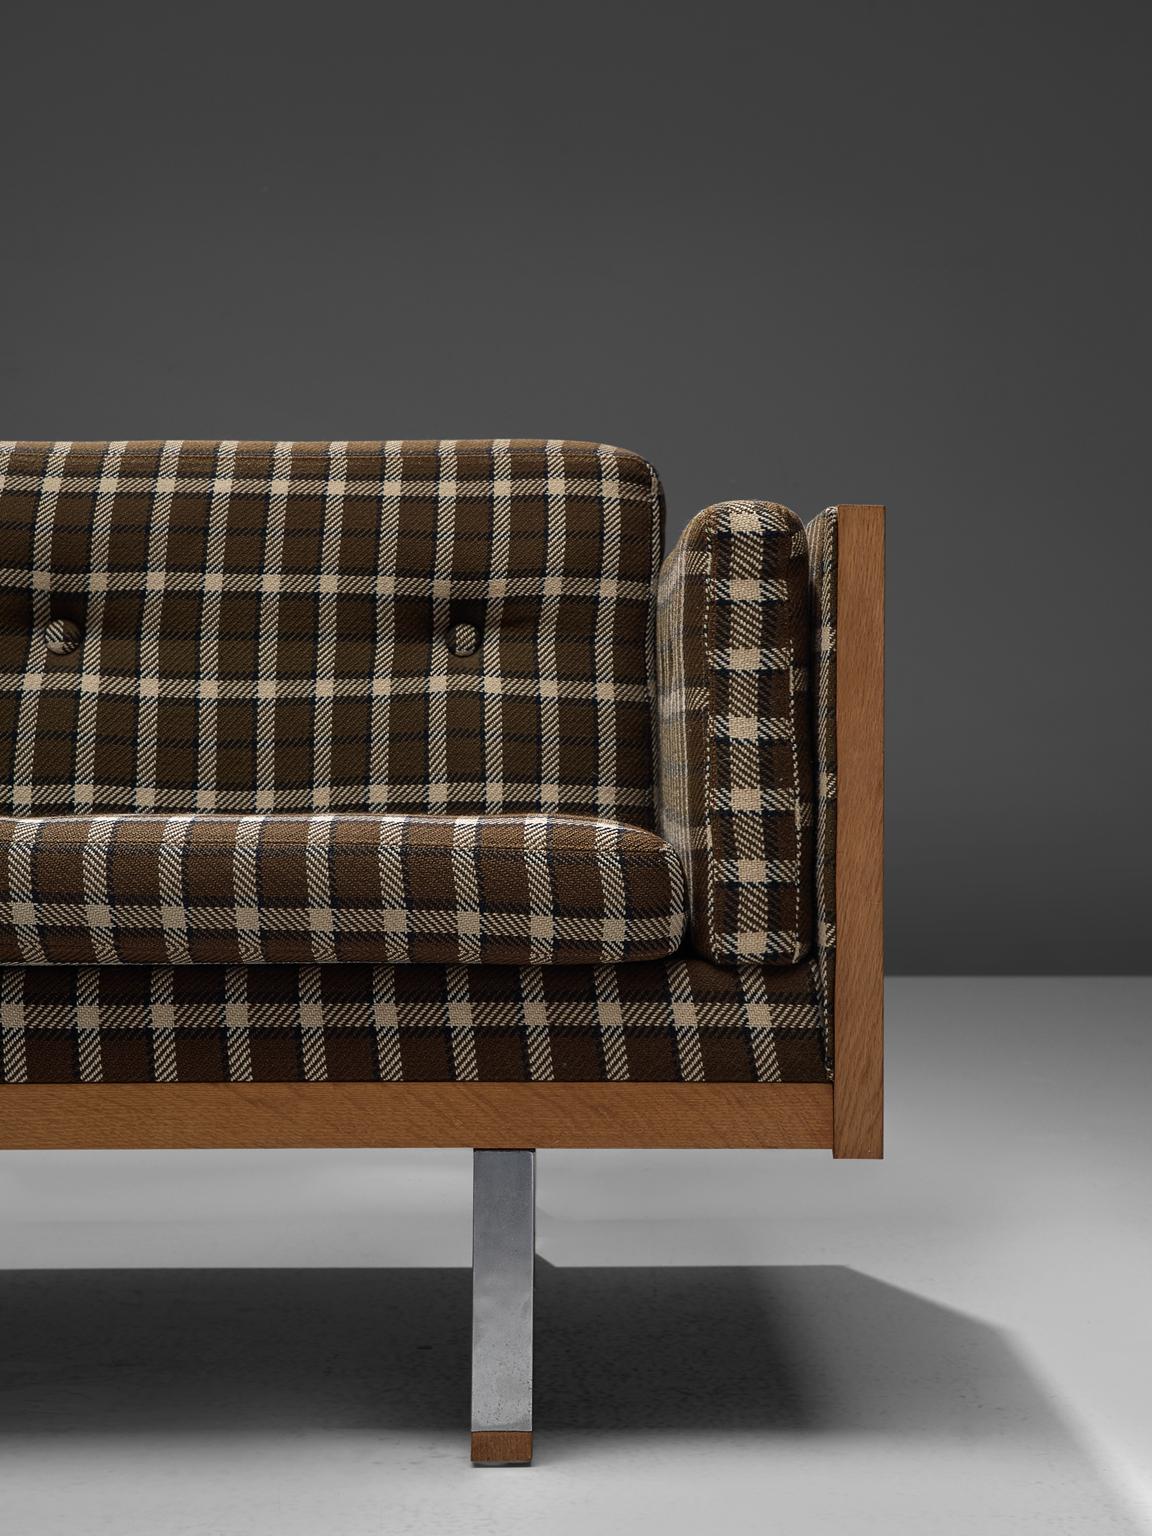 Metal Scandinavian Living Room Set in Oak and Checkered Upholstery